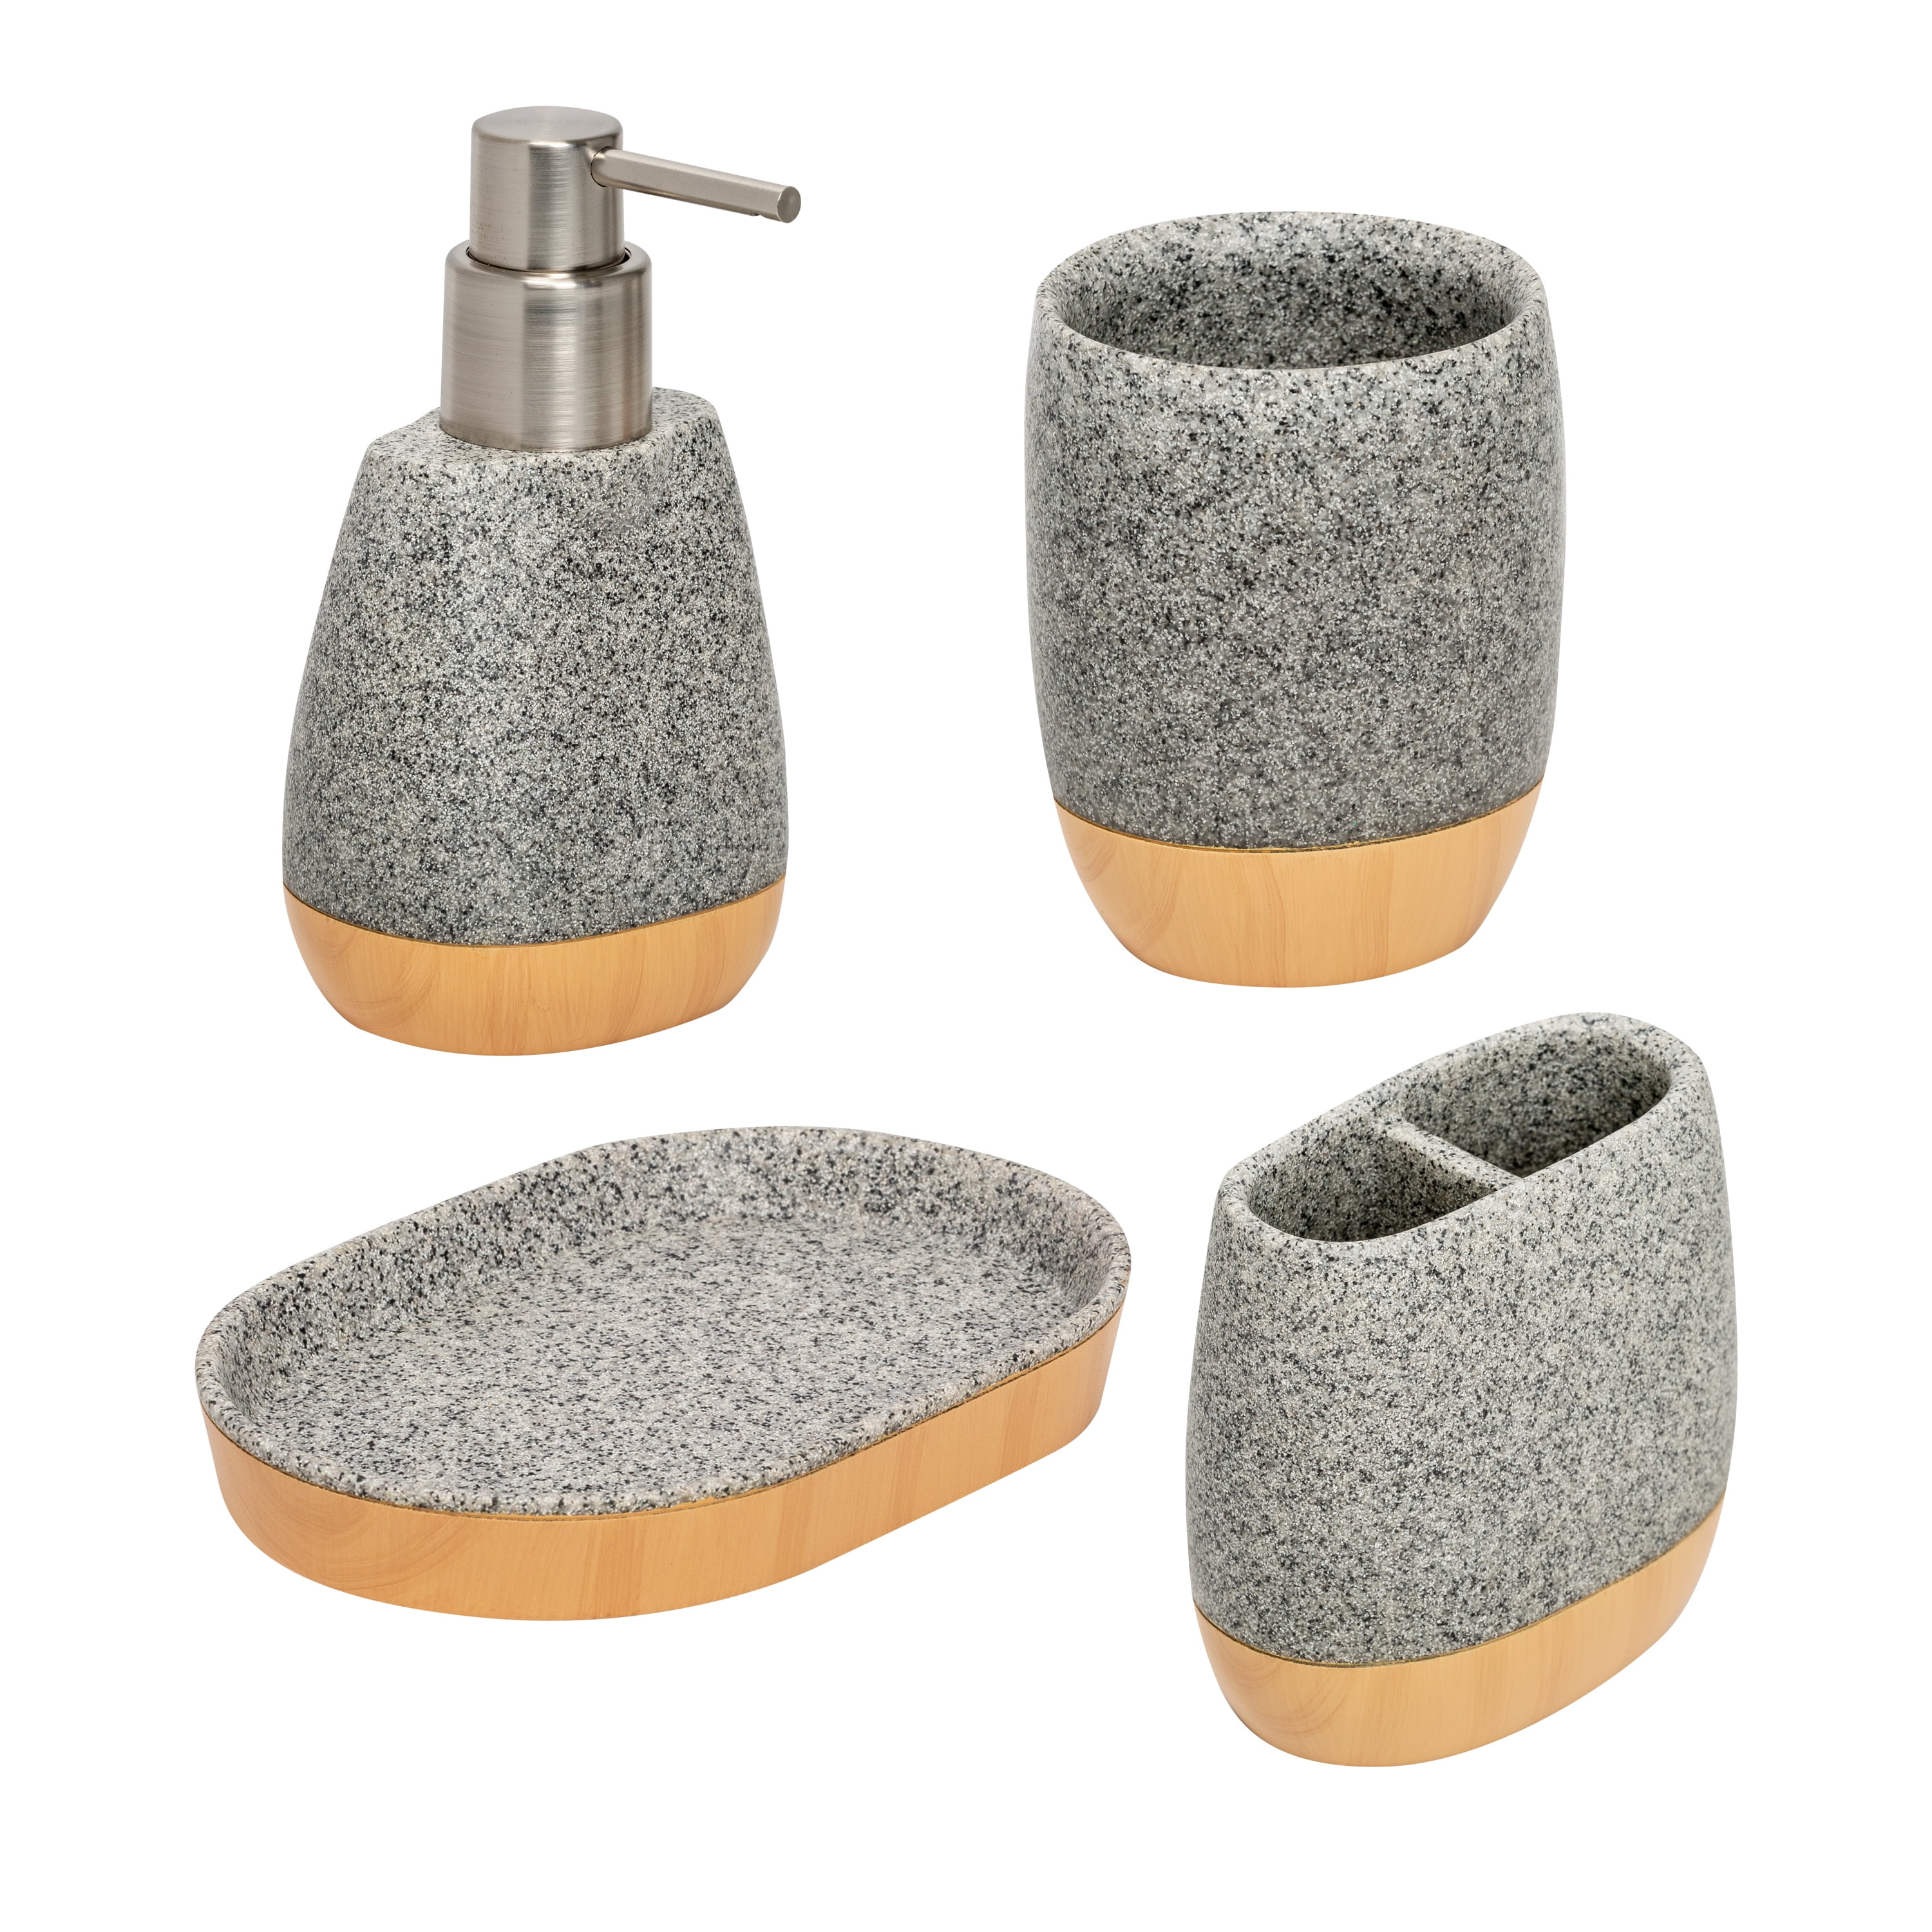 Tumbler Rubber/Ceramic Bathroom Accessory Set Soap Dish/Dispenser Fumo 